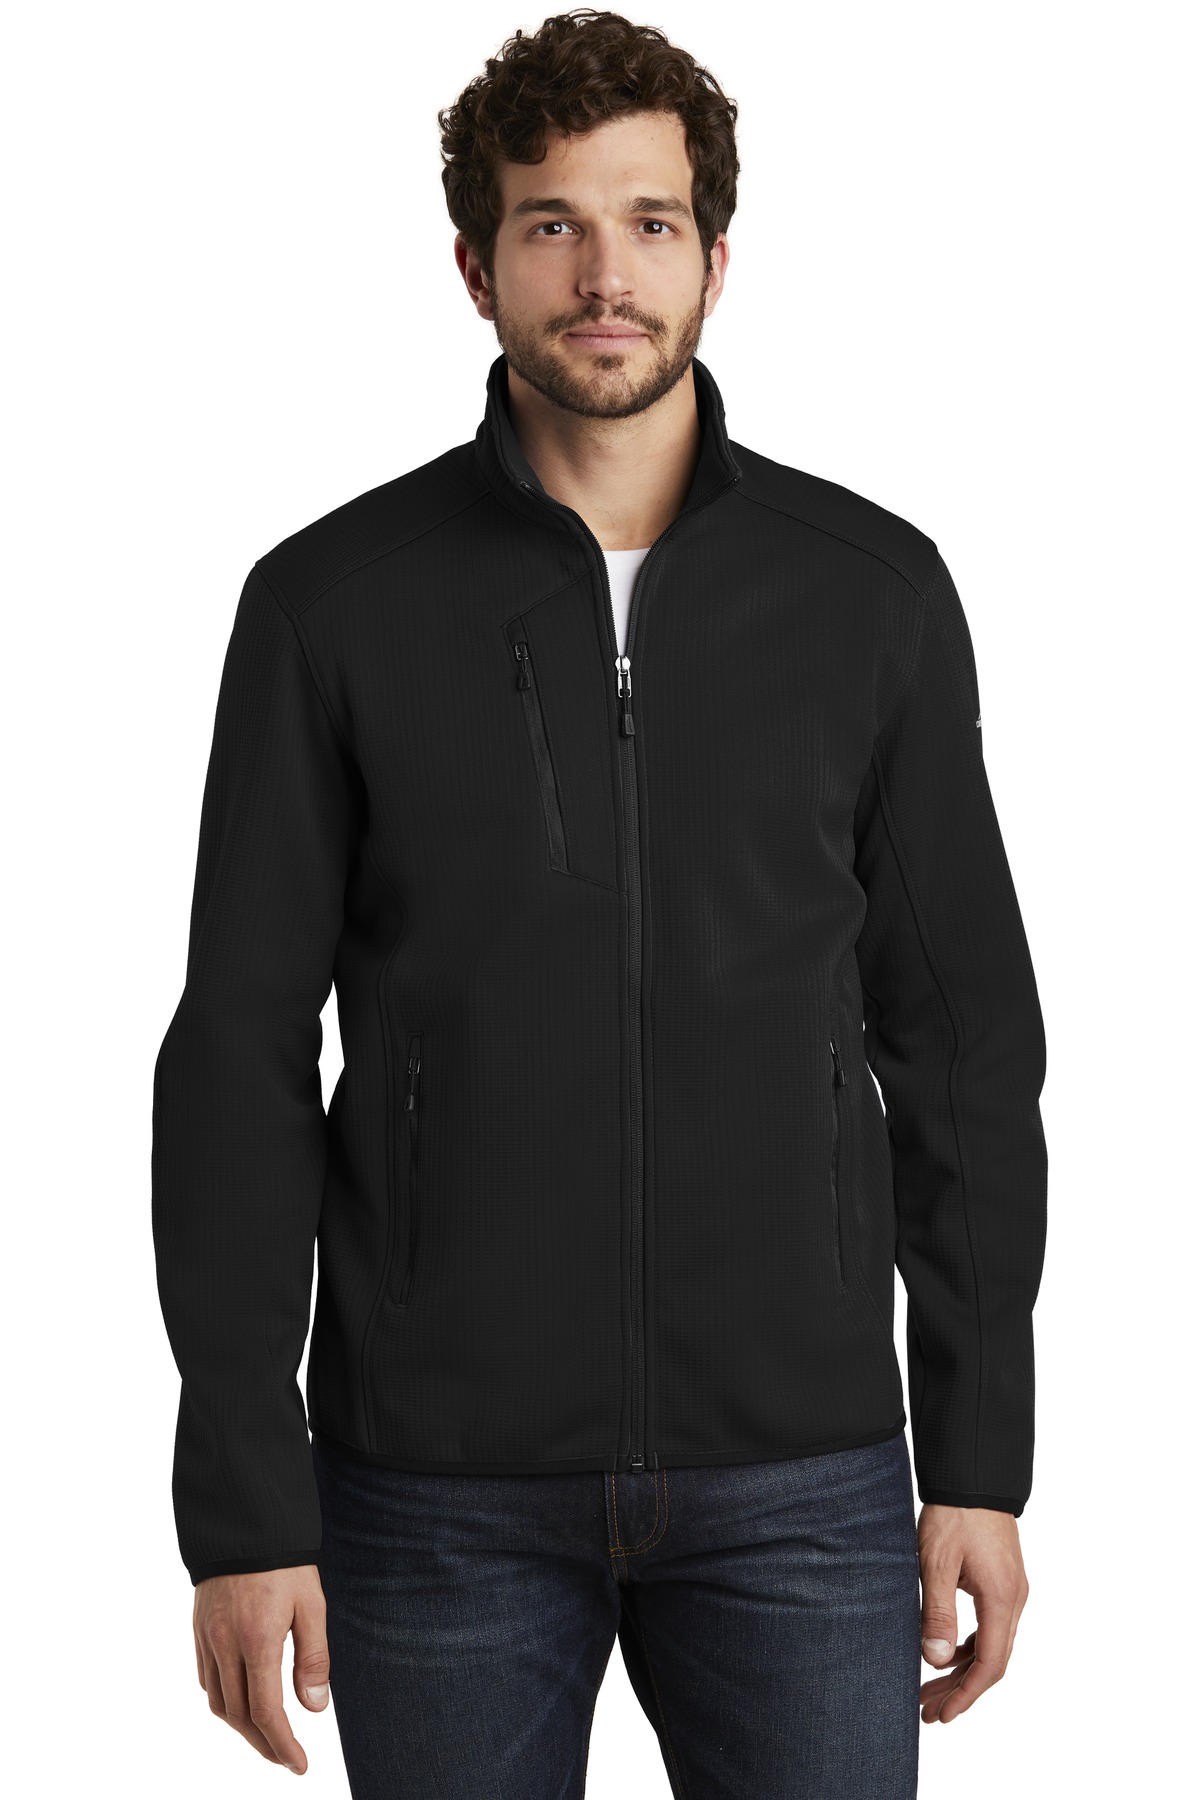 Eddie Bauer ® Dash Full-Zip Fleece Jacket. EB242 - Custom Shirt Shop